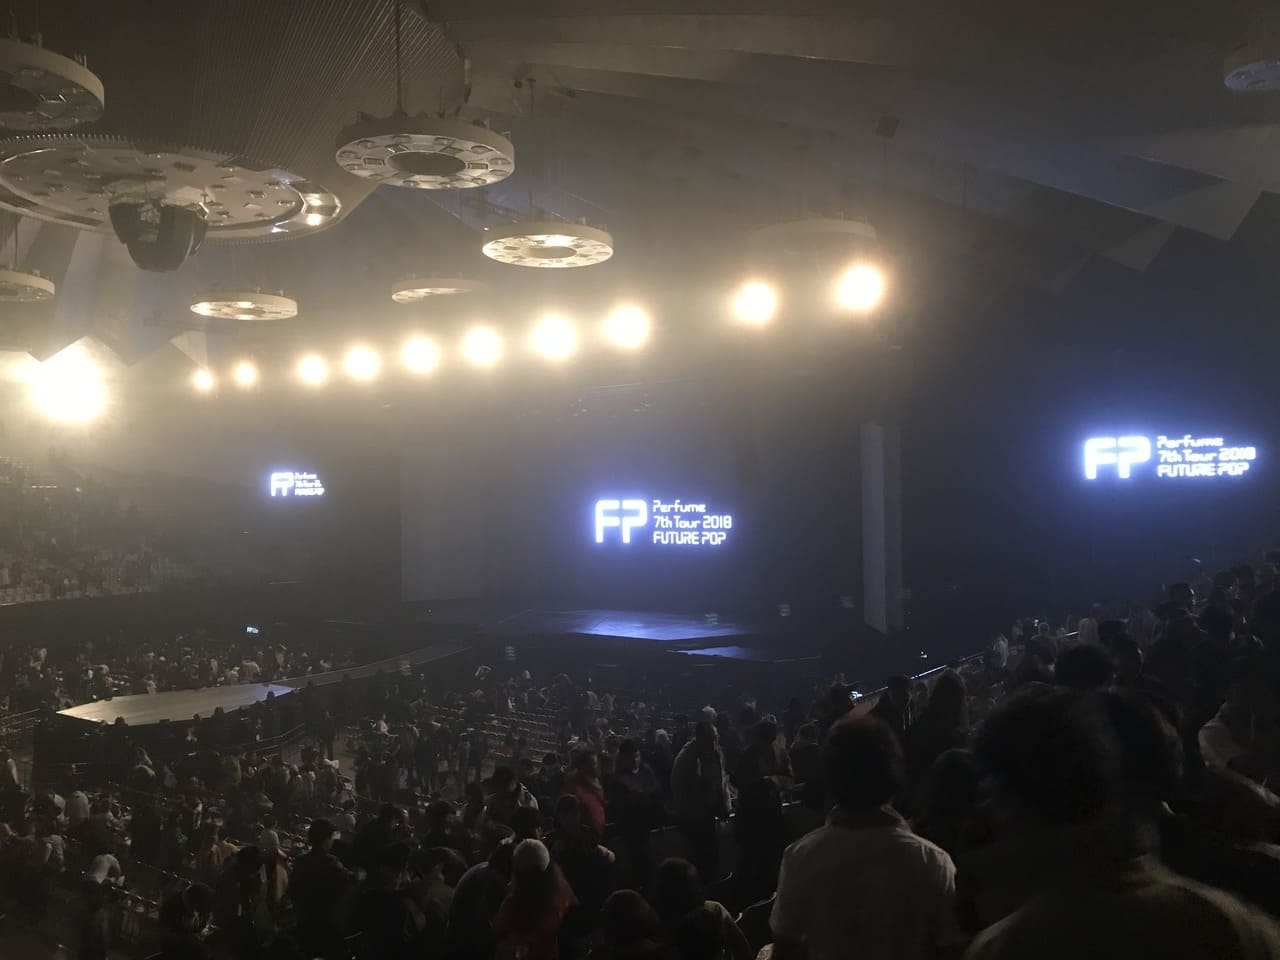 Perfume 7th Tour 2018 FUTURE POP